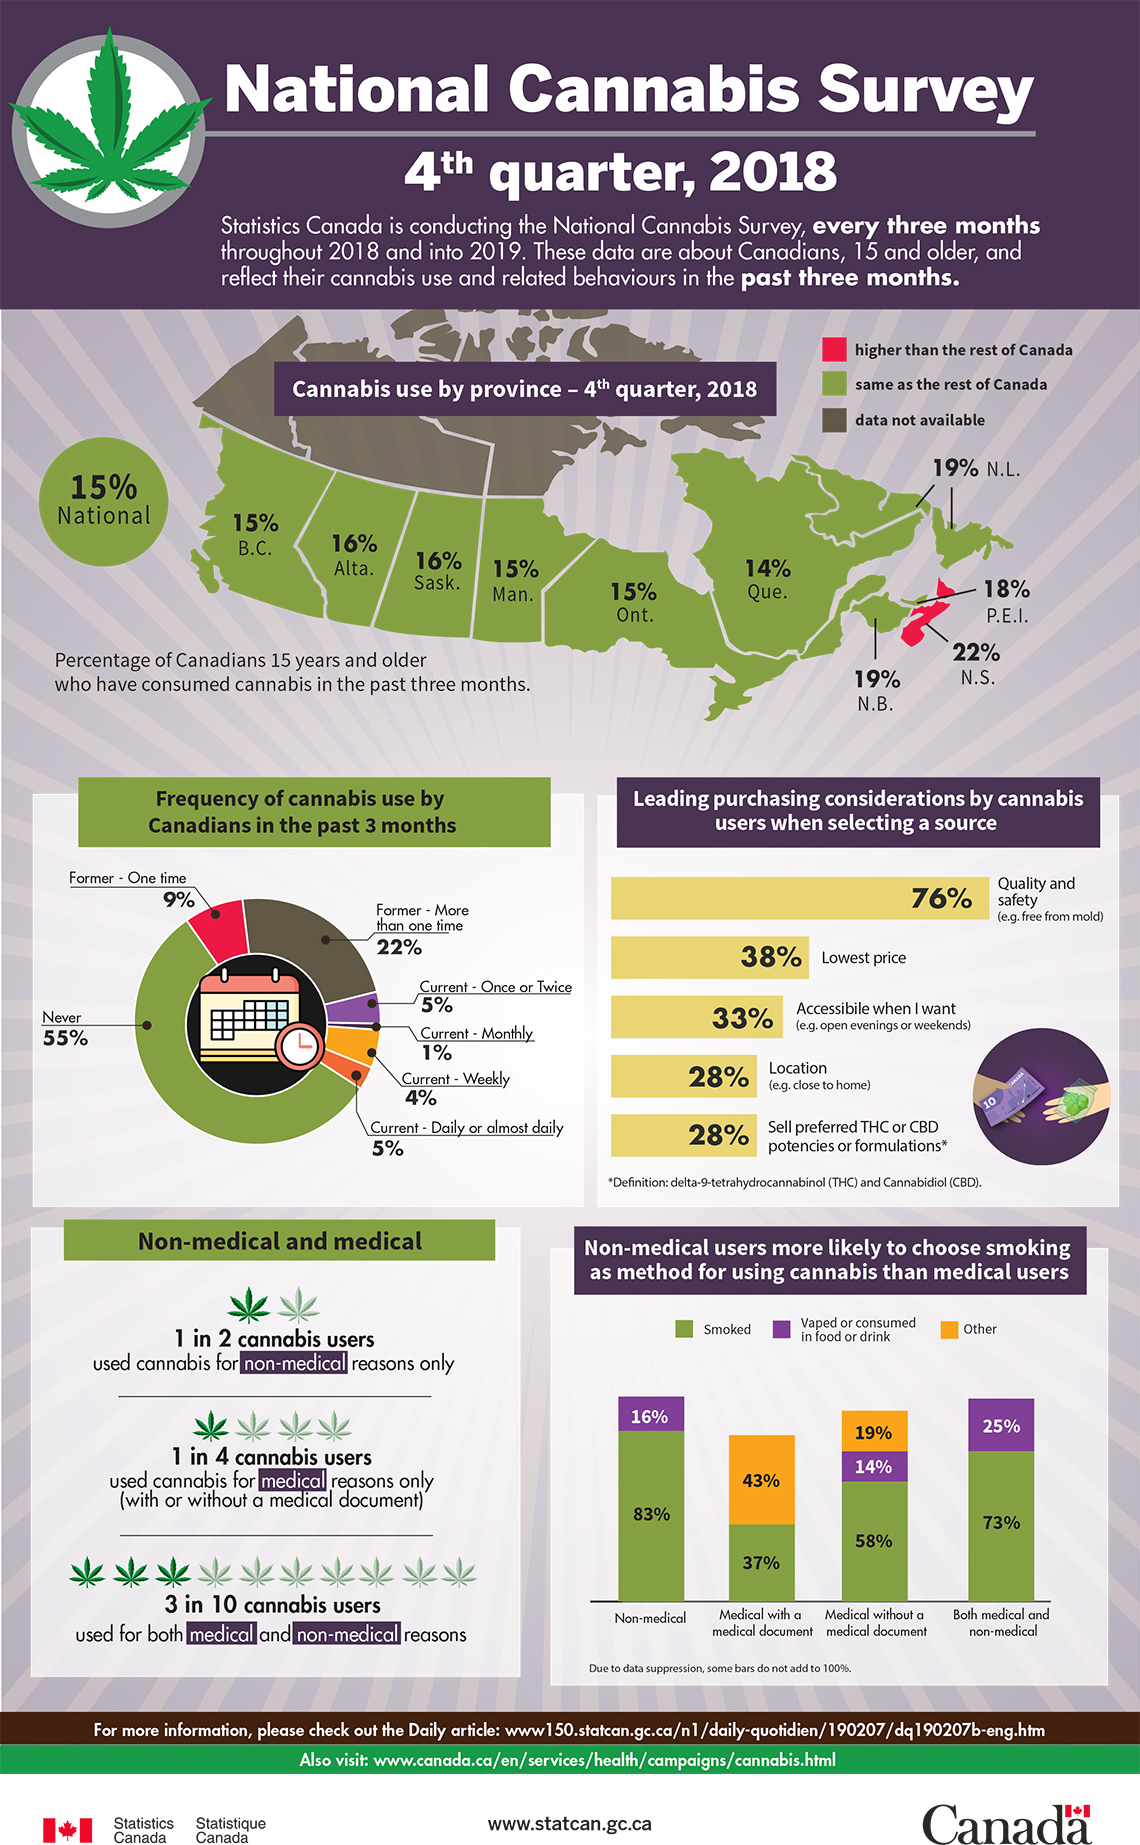 National Cannabis Survey, 4th quarter 2018